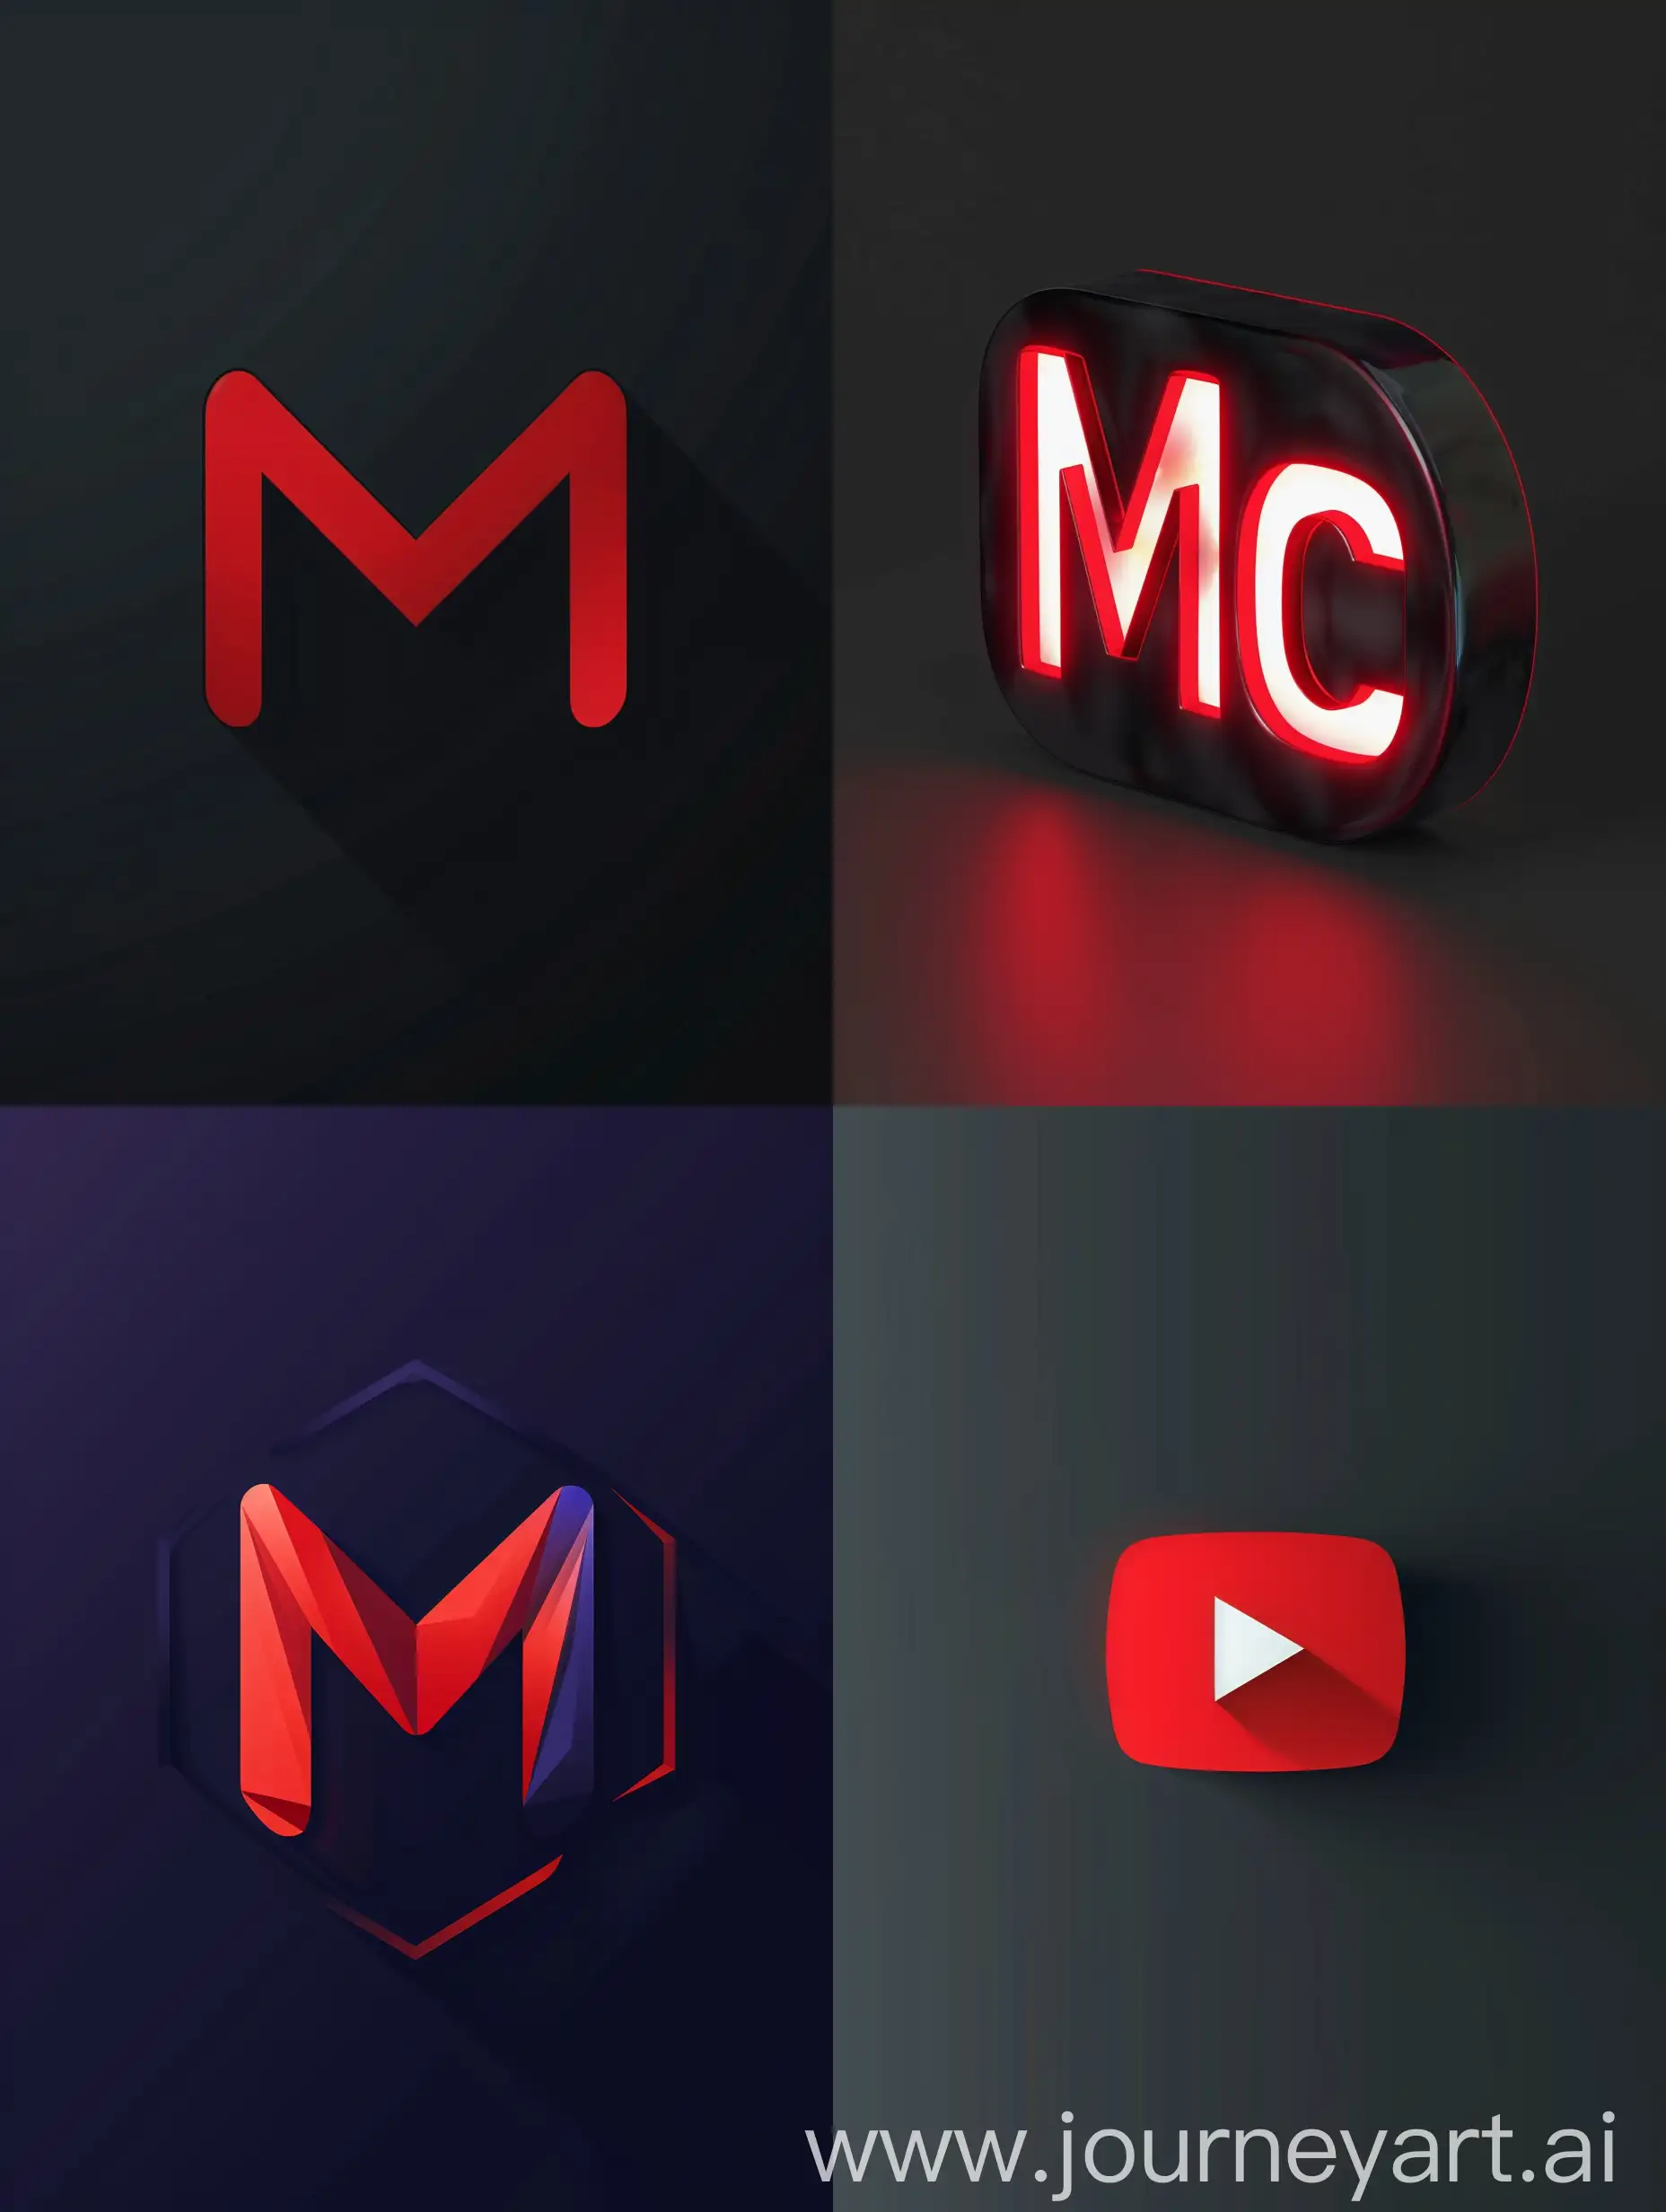 Professional-YouTube-Logo-Design-with-M-C-Symbols